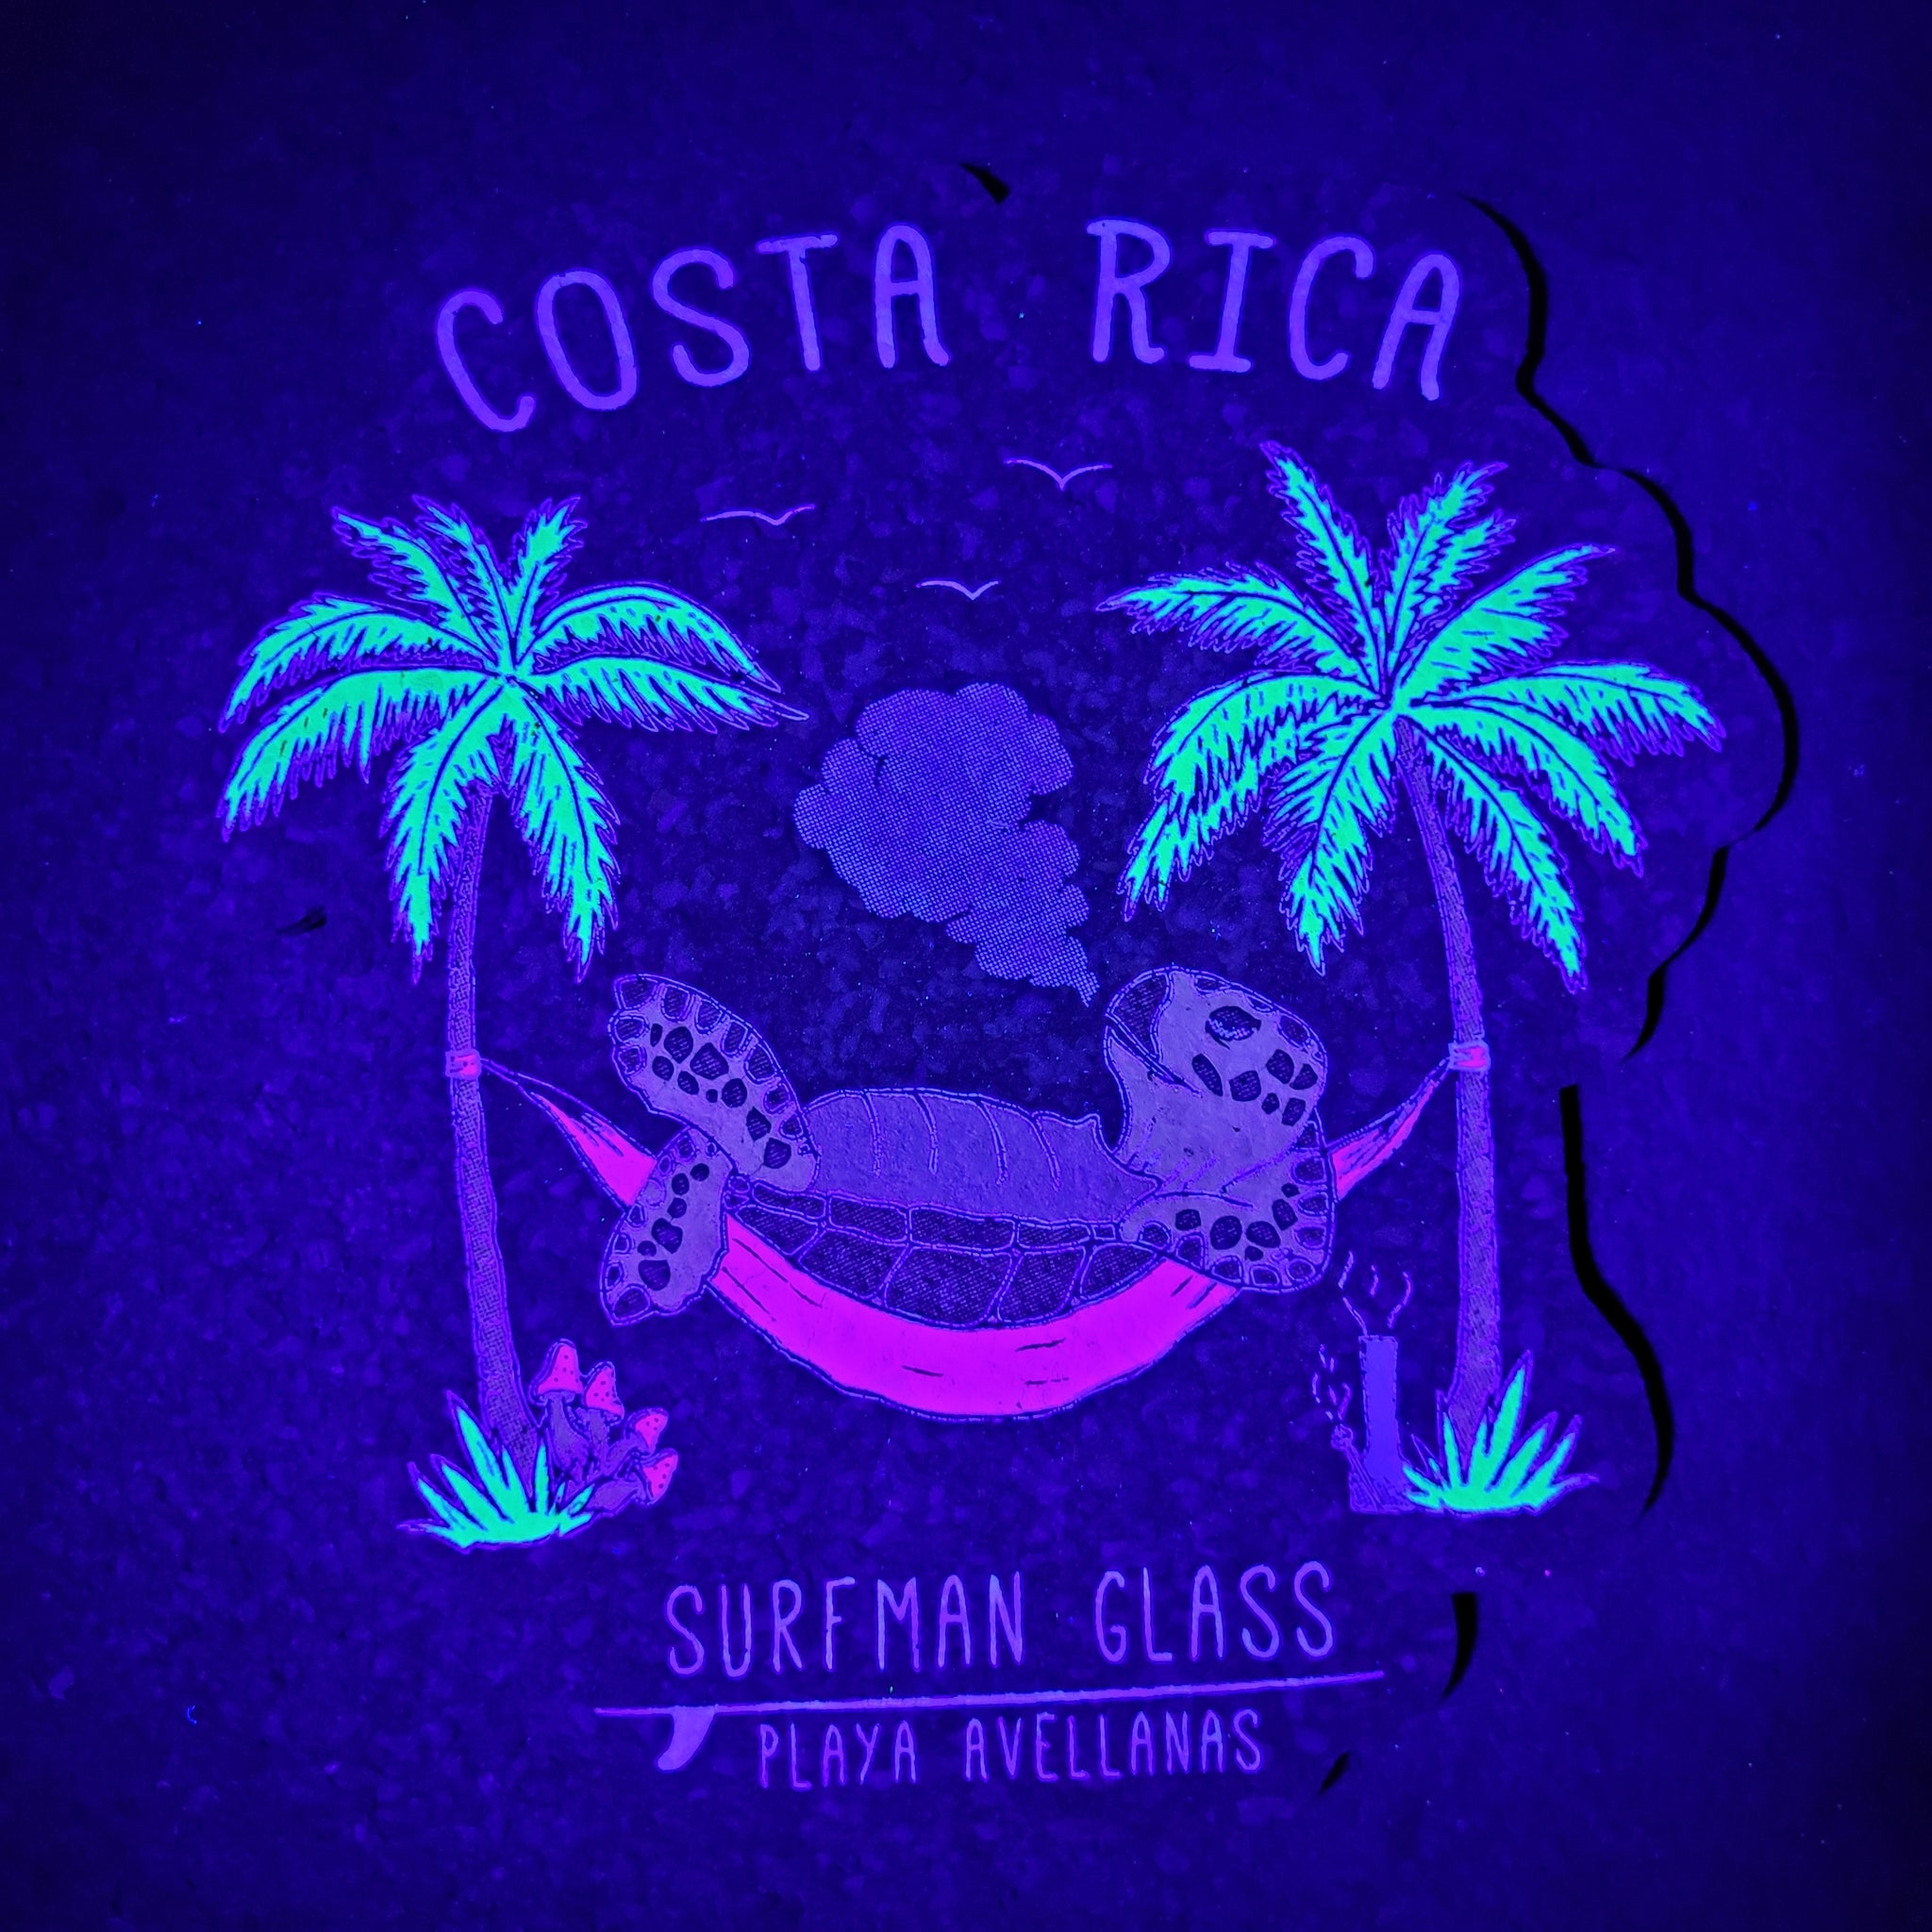 Surfman Glass -Costa Rica UV Moodmat